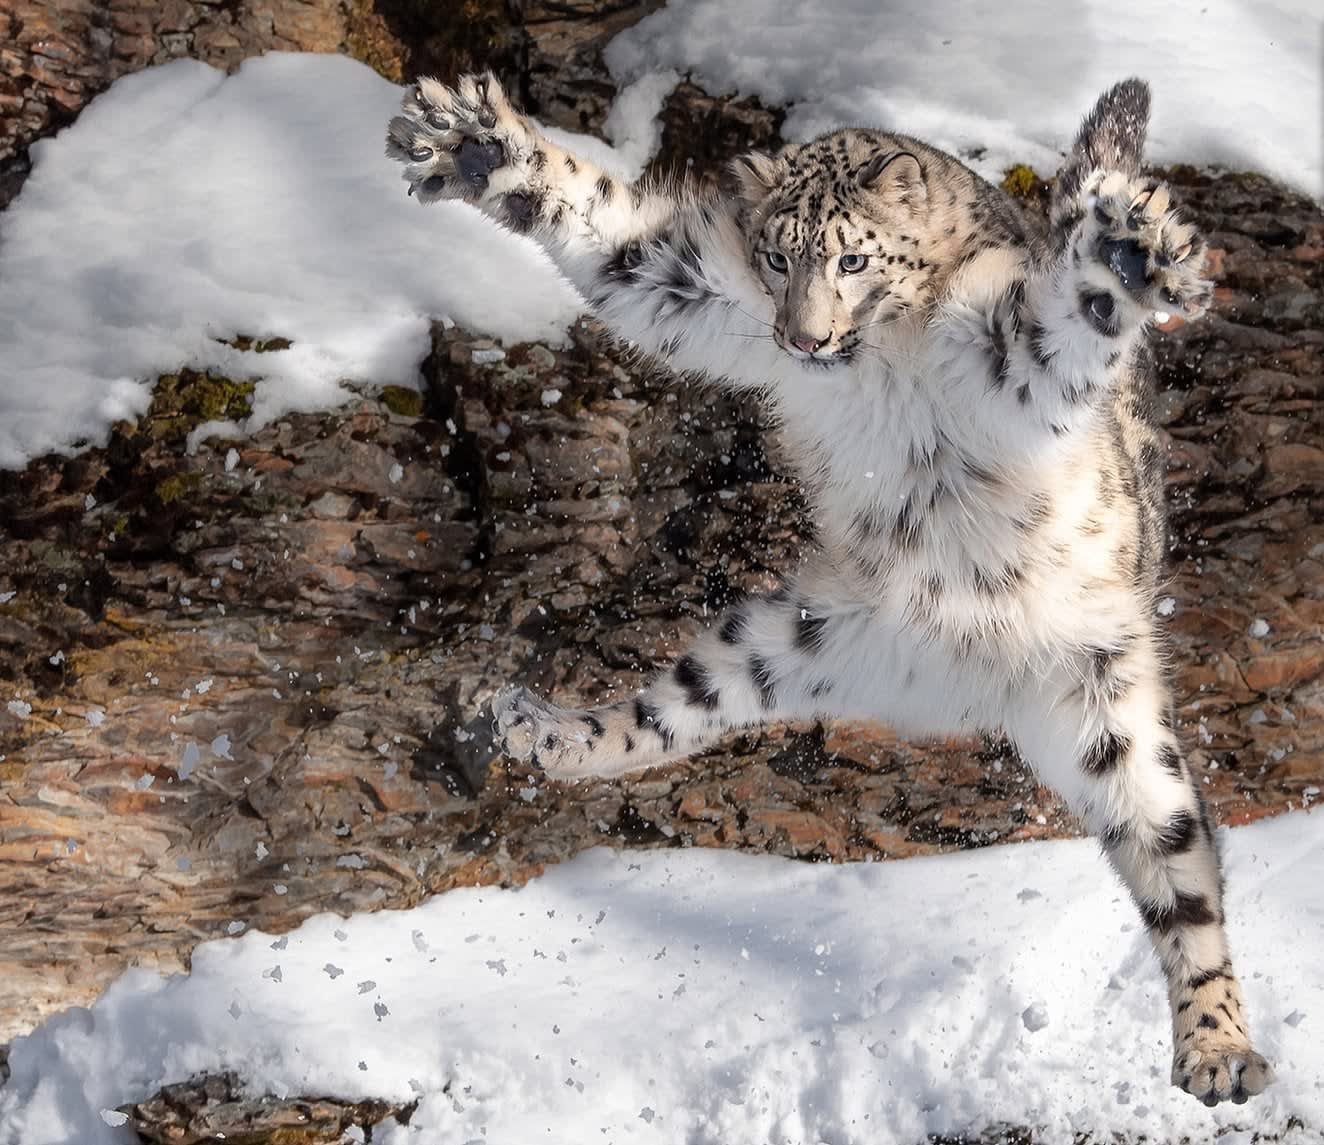 The majestic Snow Leopard